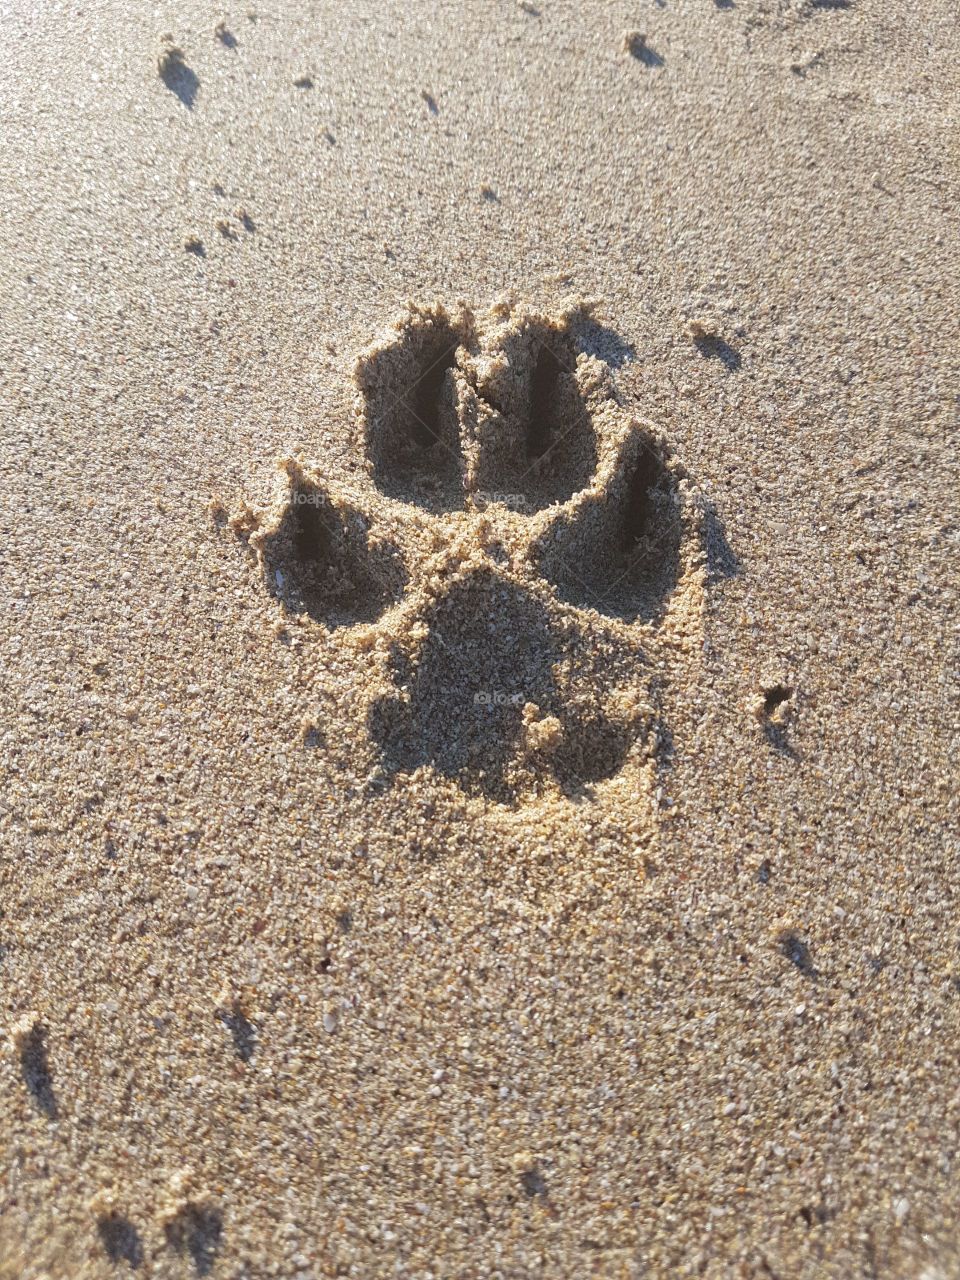 animal print on sand